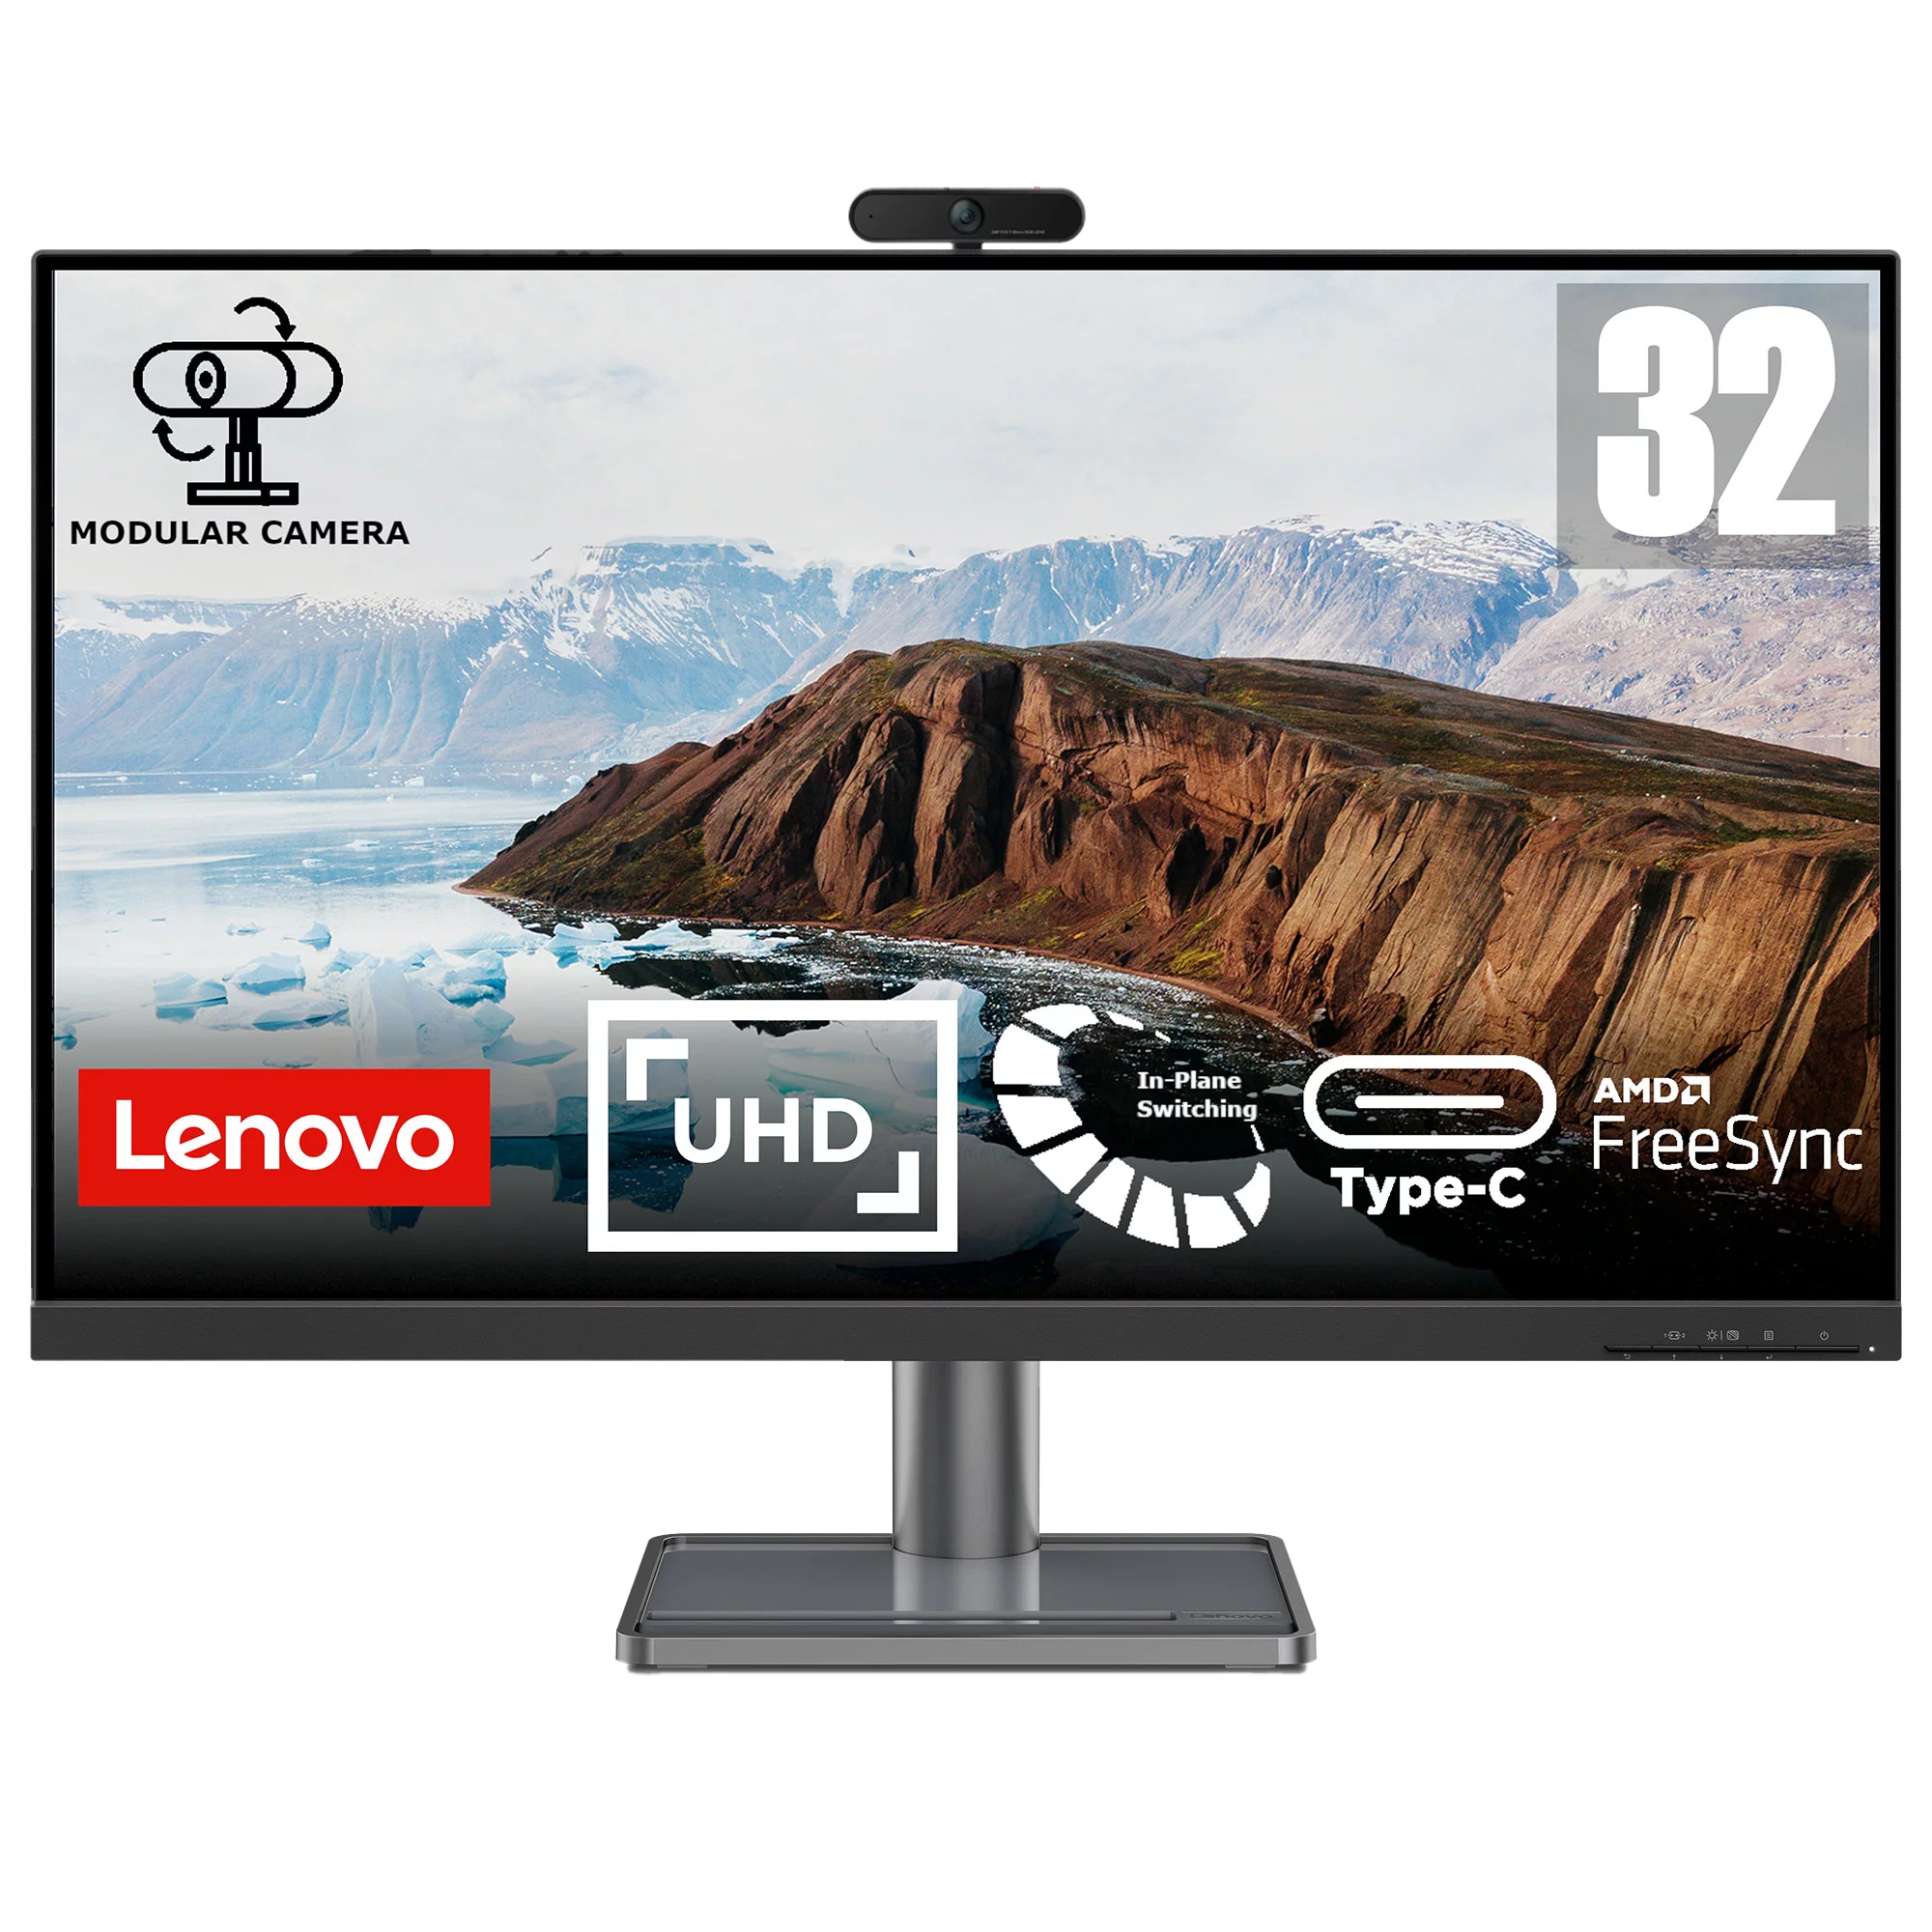 Lenovo L32p-30 32-inch Monitor with Webcam